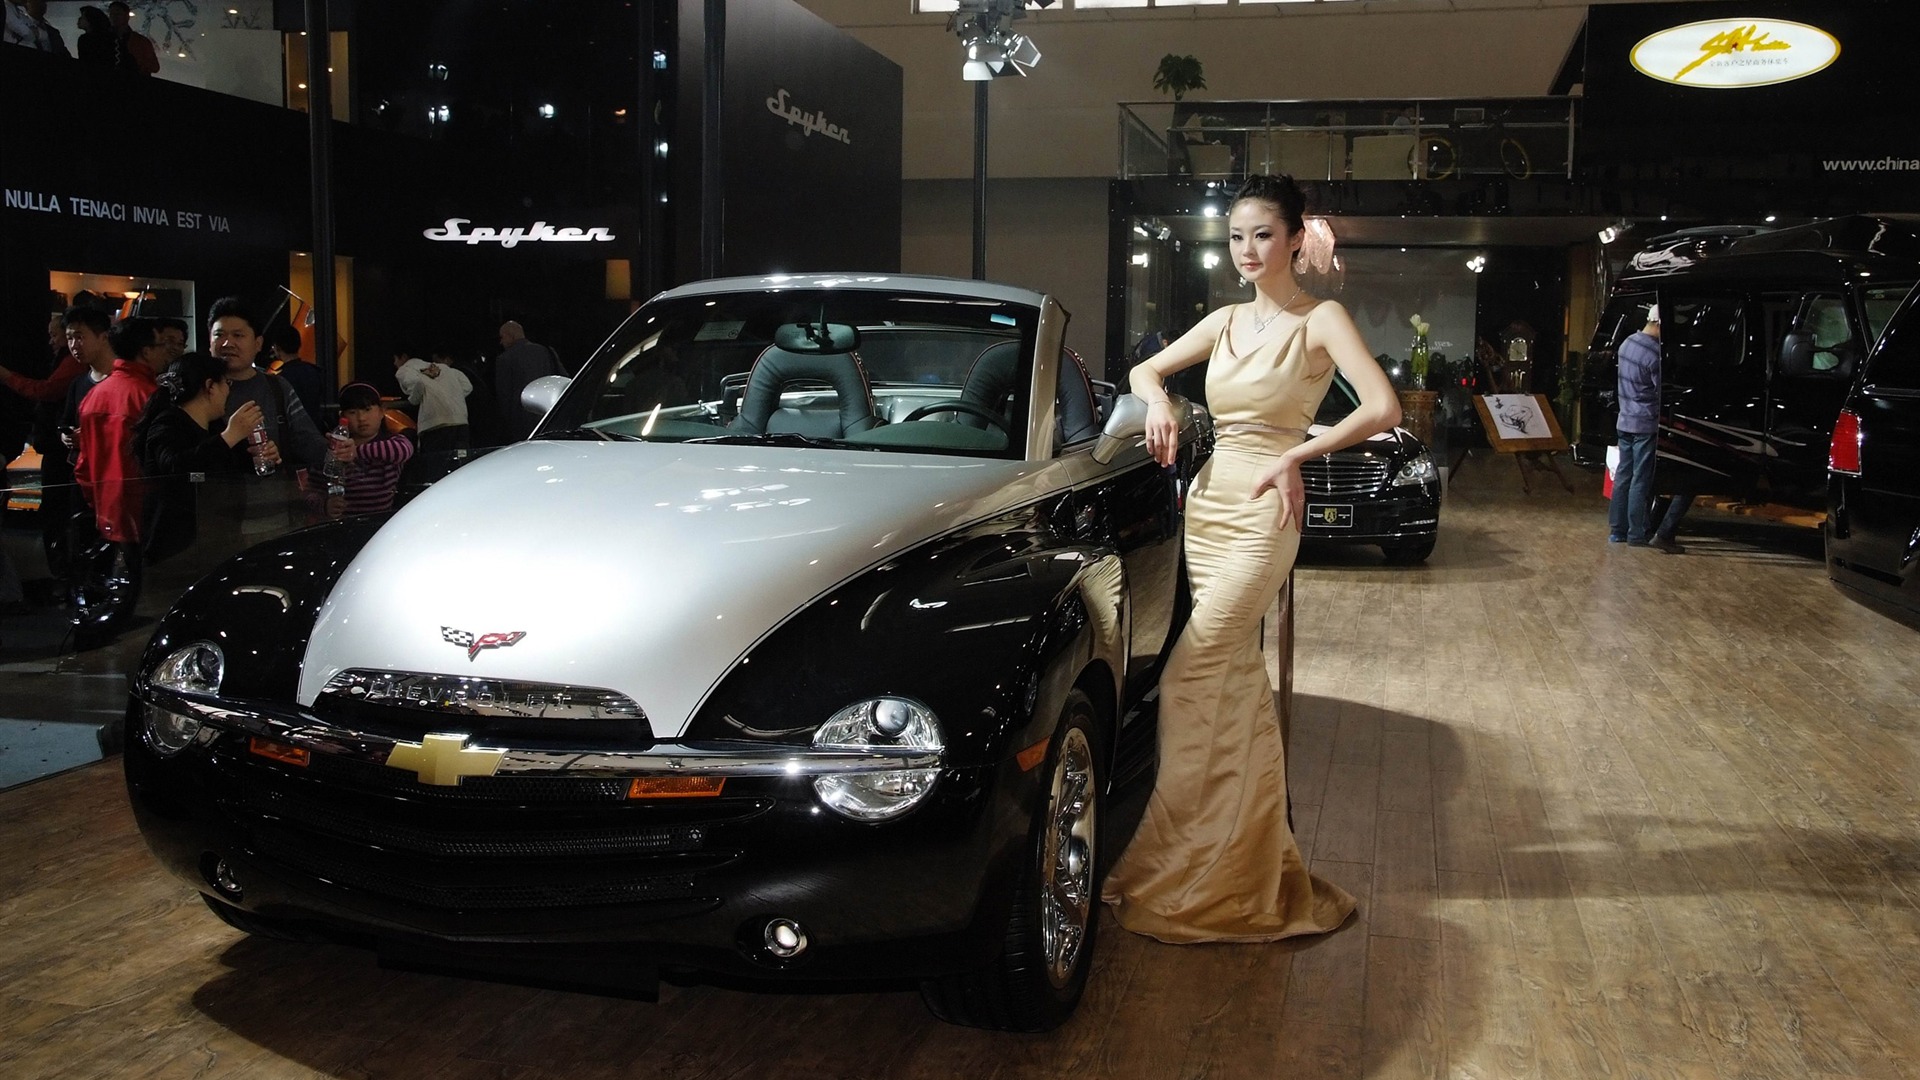 2010 Salón Internacional del Automóvil de Beijing Heung Che belleza (obras barras de refuerzo) #15 - 1920x1080